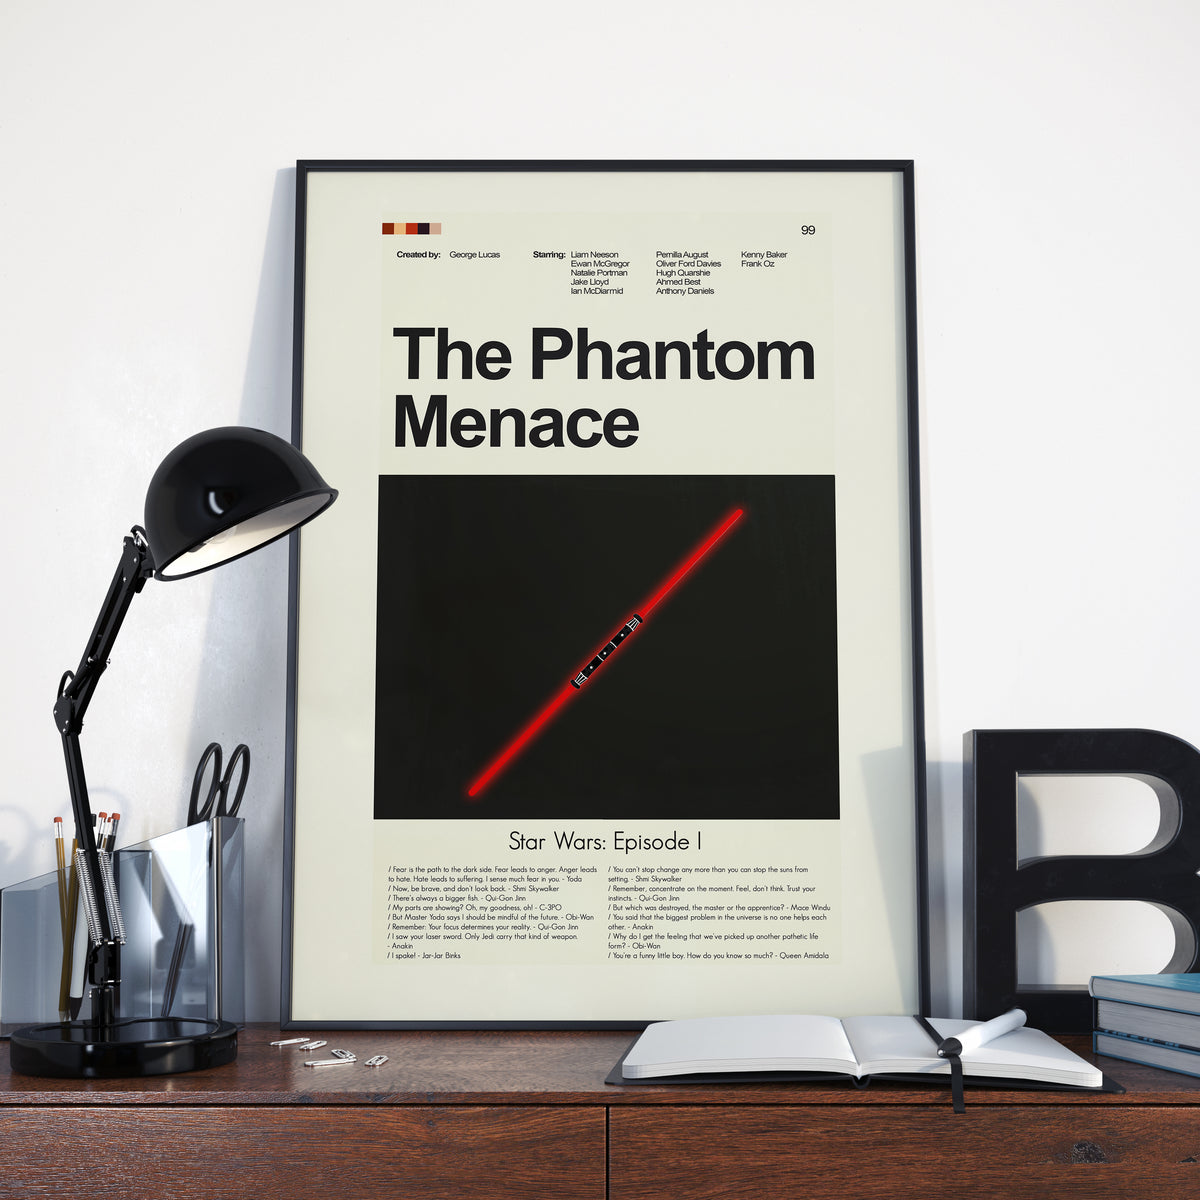 The Phantom Menace: Star Wars Episode I - Darth Maul Lightsaber | 12"x18" or 18"x24" Print only